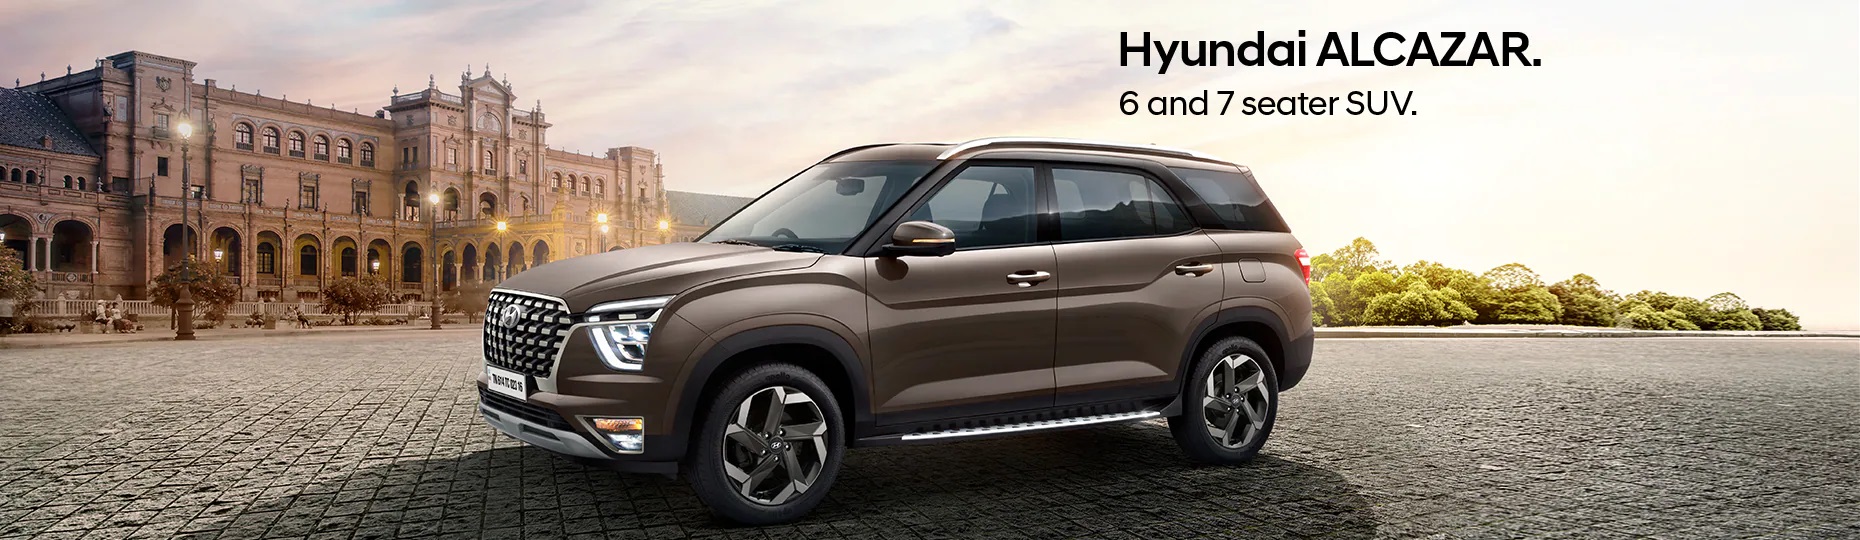 Hyundai alcazar On Road Price